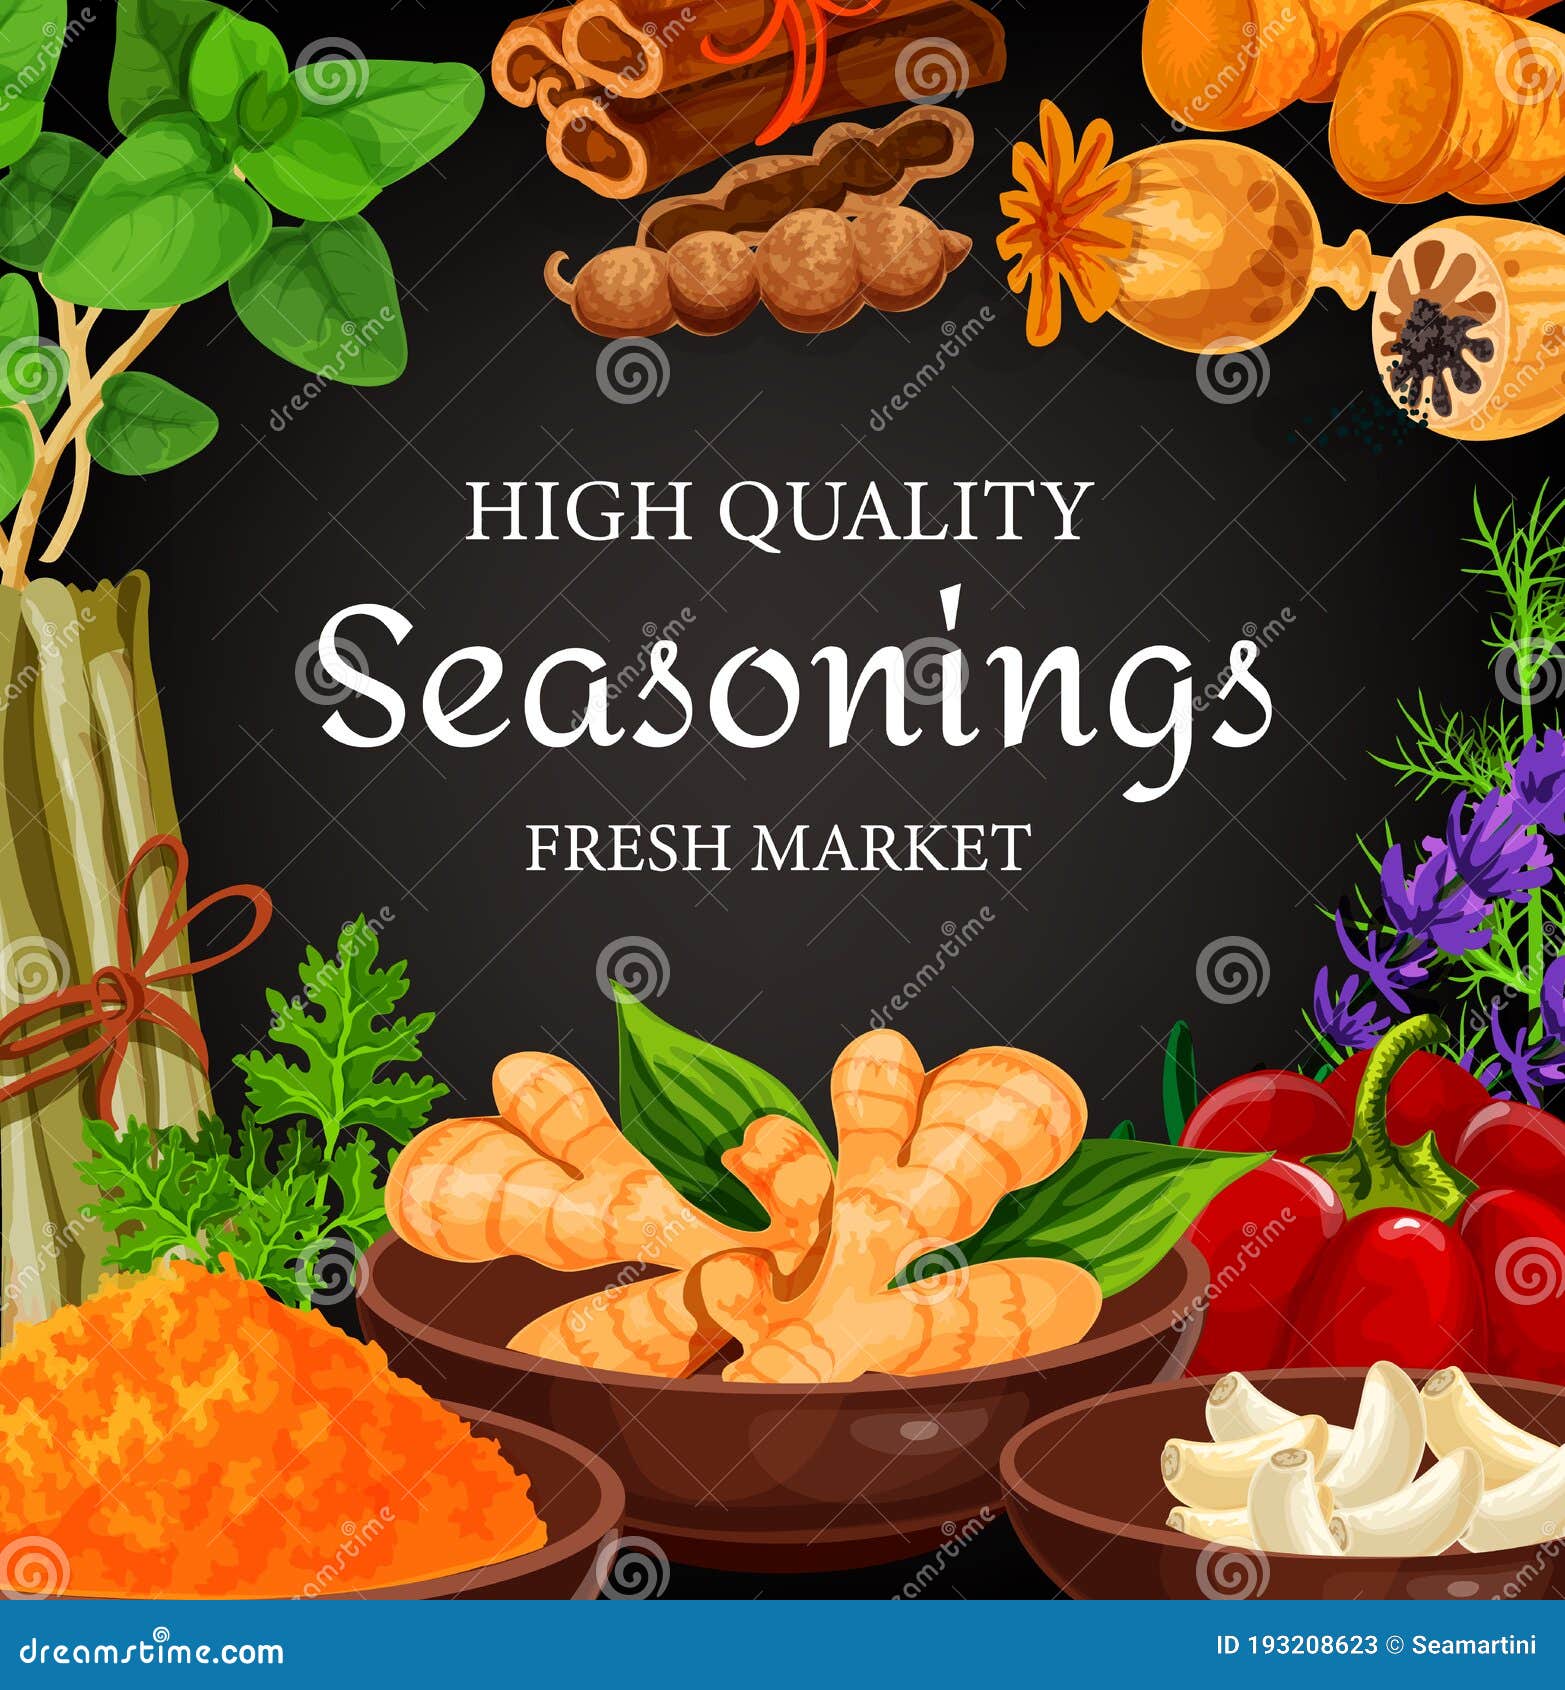 https://thumbs.dreamstime.com/z/seasonings-herbs-cooking-spices-condiments-food-vector-farm-vegetables-garlic-rosemary-culinary-vanilla-cinnamon-anise-celery-193208623.jpg